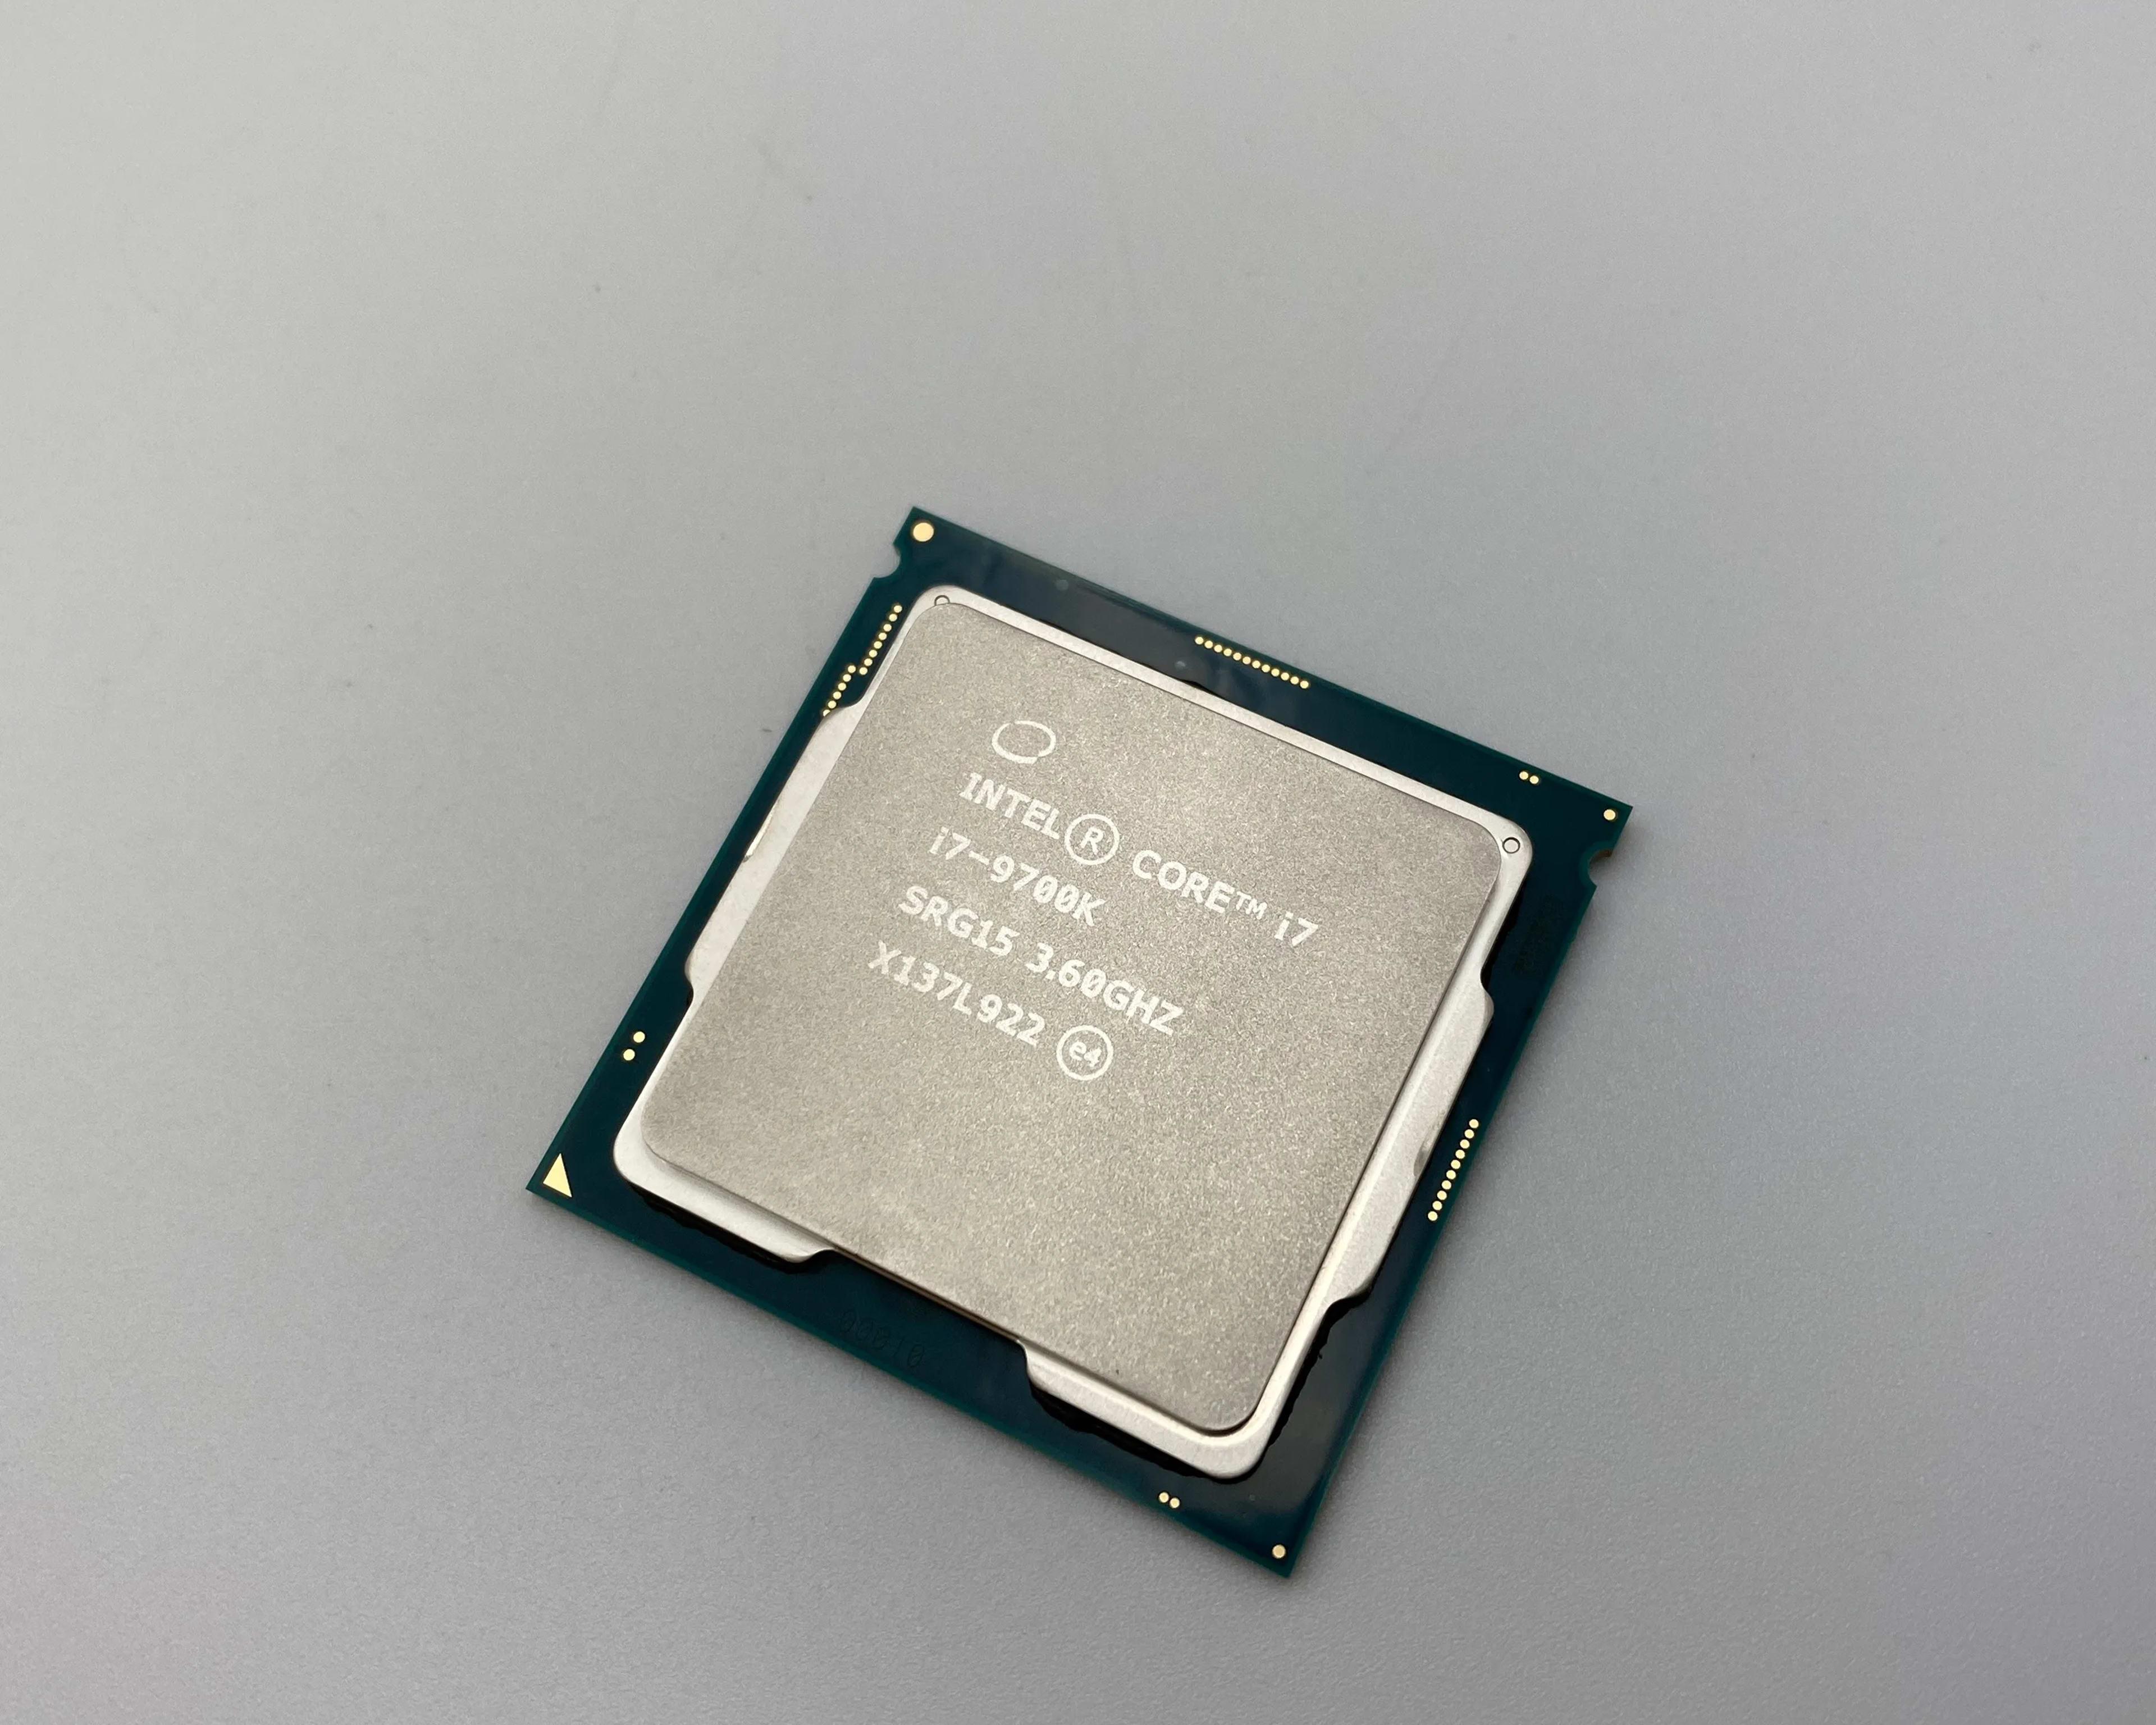 Intel Core i7-9700K SRELT 3.6GHz 8 Cores 8 Threads 12MB Cache LGA1151